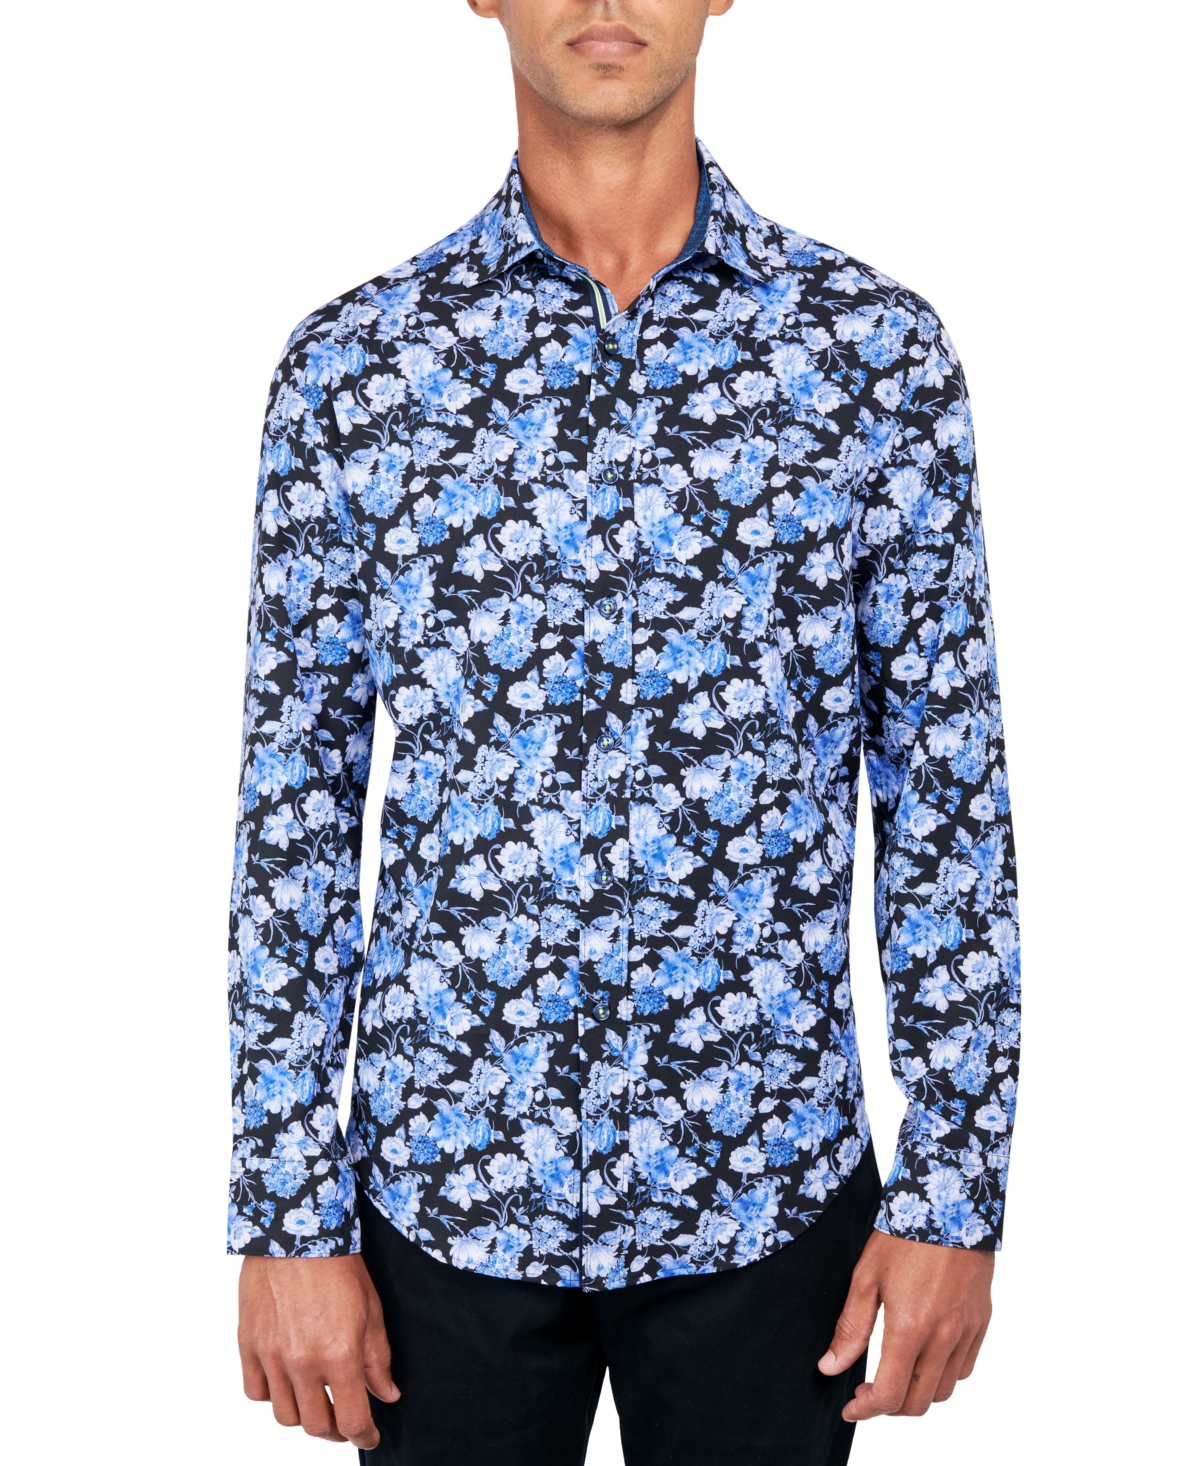 Men's Regular-Fit Non-Iron Performance Stretch Floral-Print Button-Down Shirt - Navy